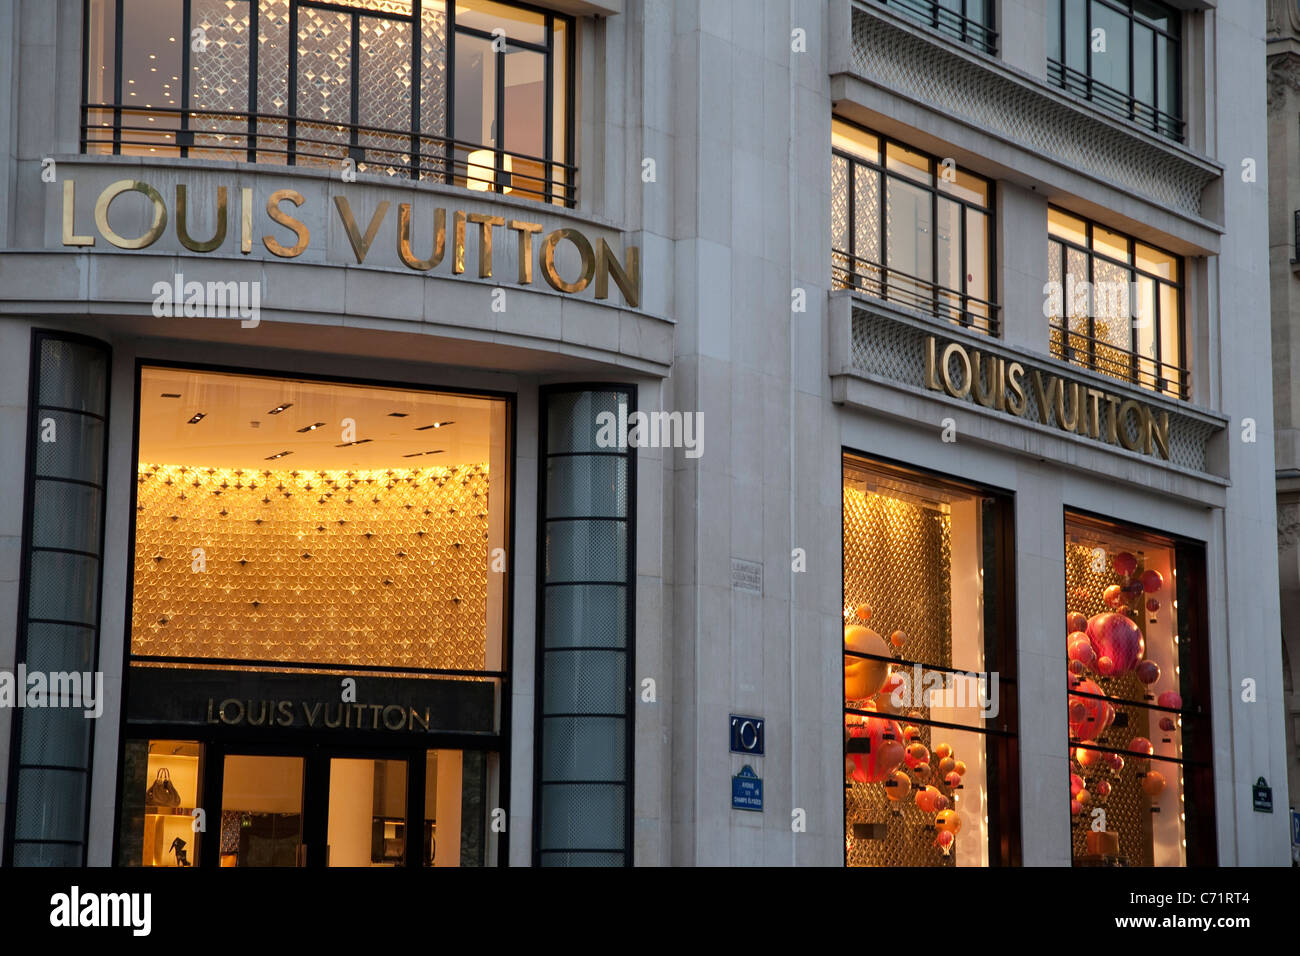 Louis Vuitton Shop, Cologne, Germany Stock Photo - Alamy